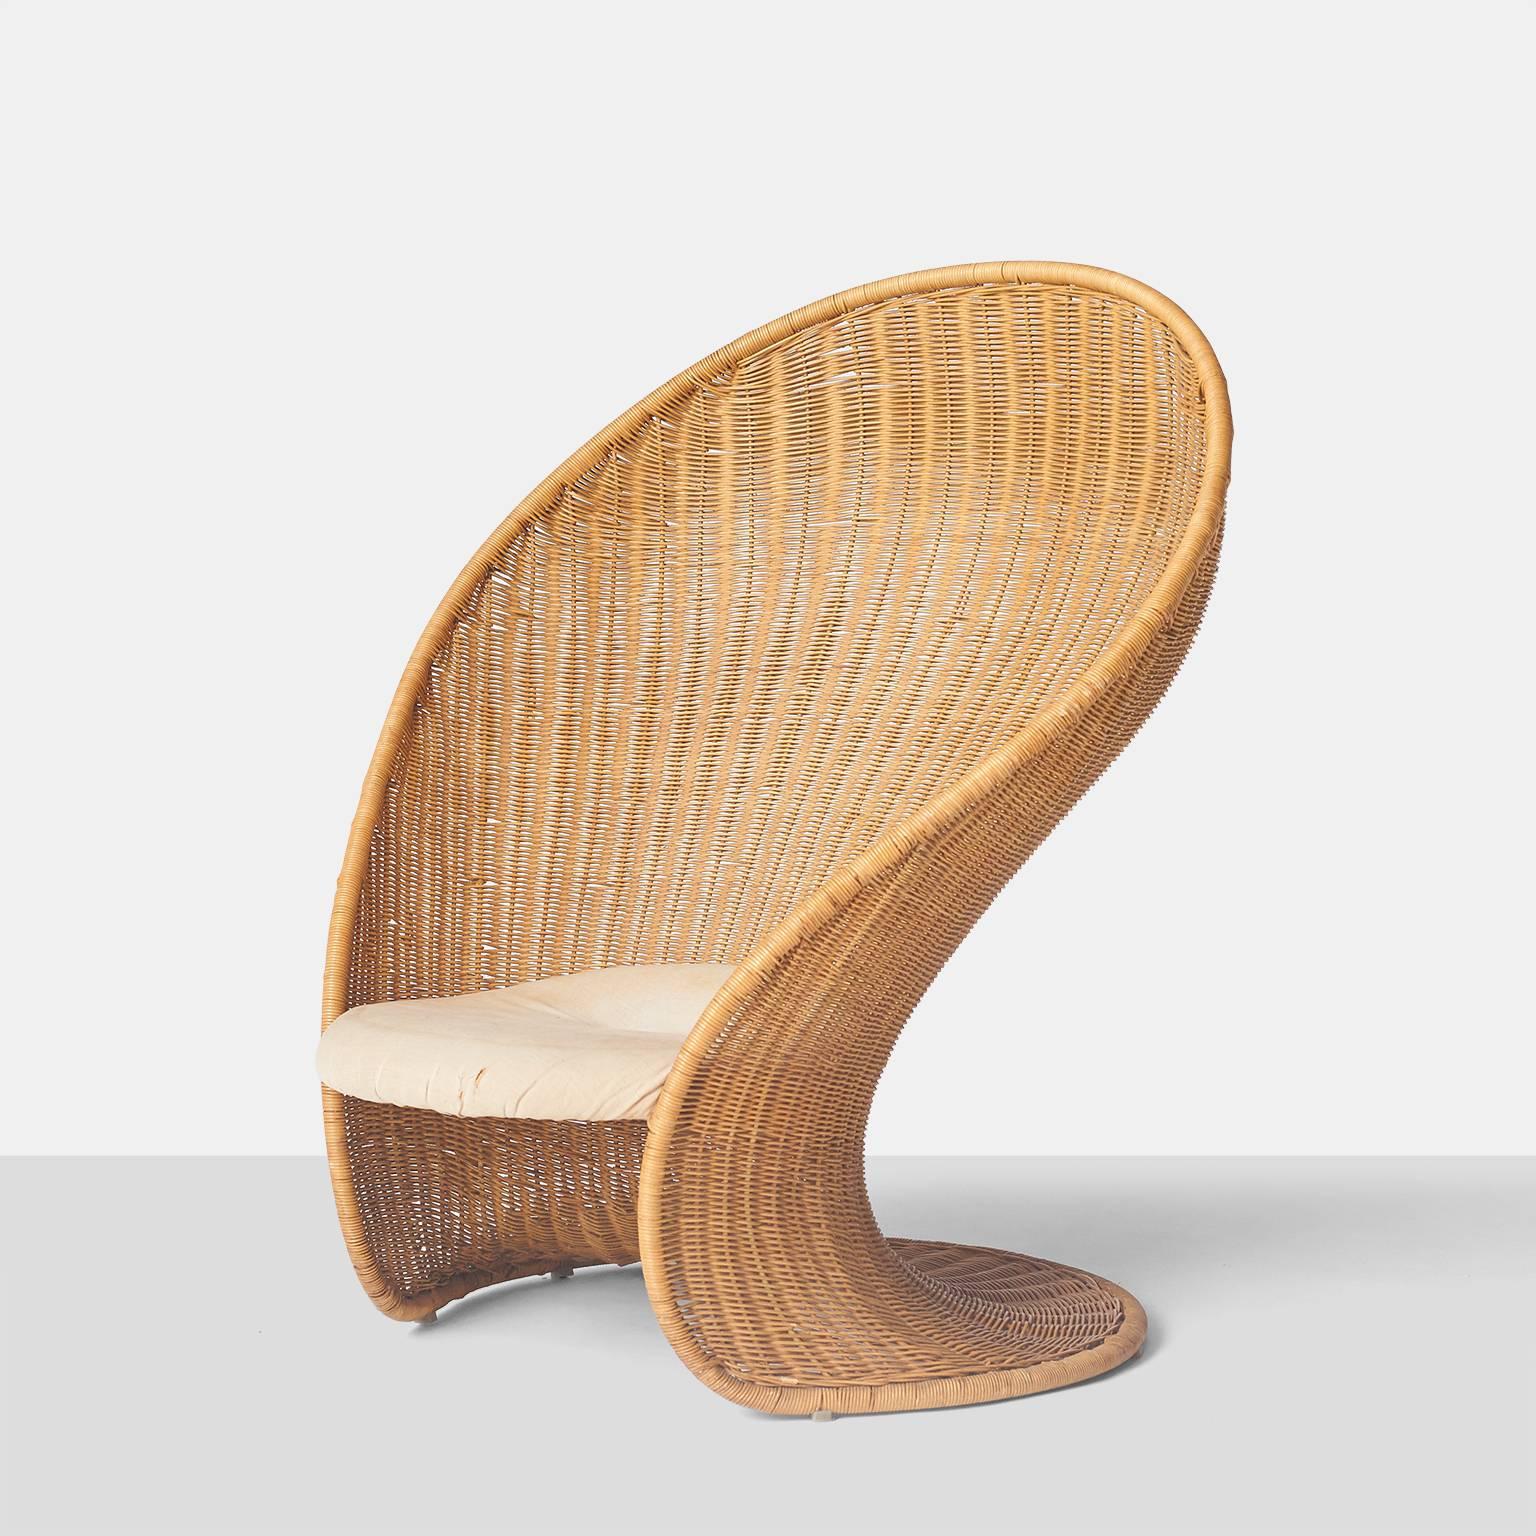 An organic modern shaped wicker lounger chair by Giovanni Travasa for Vittorio Bonacina, circa 1960, Italy.